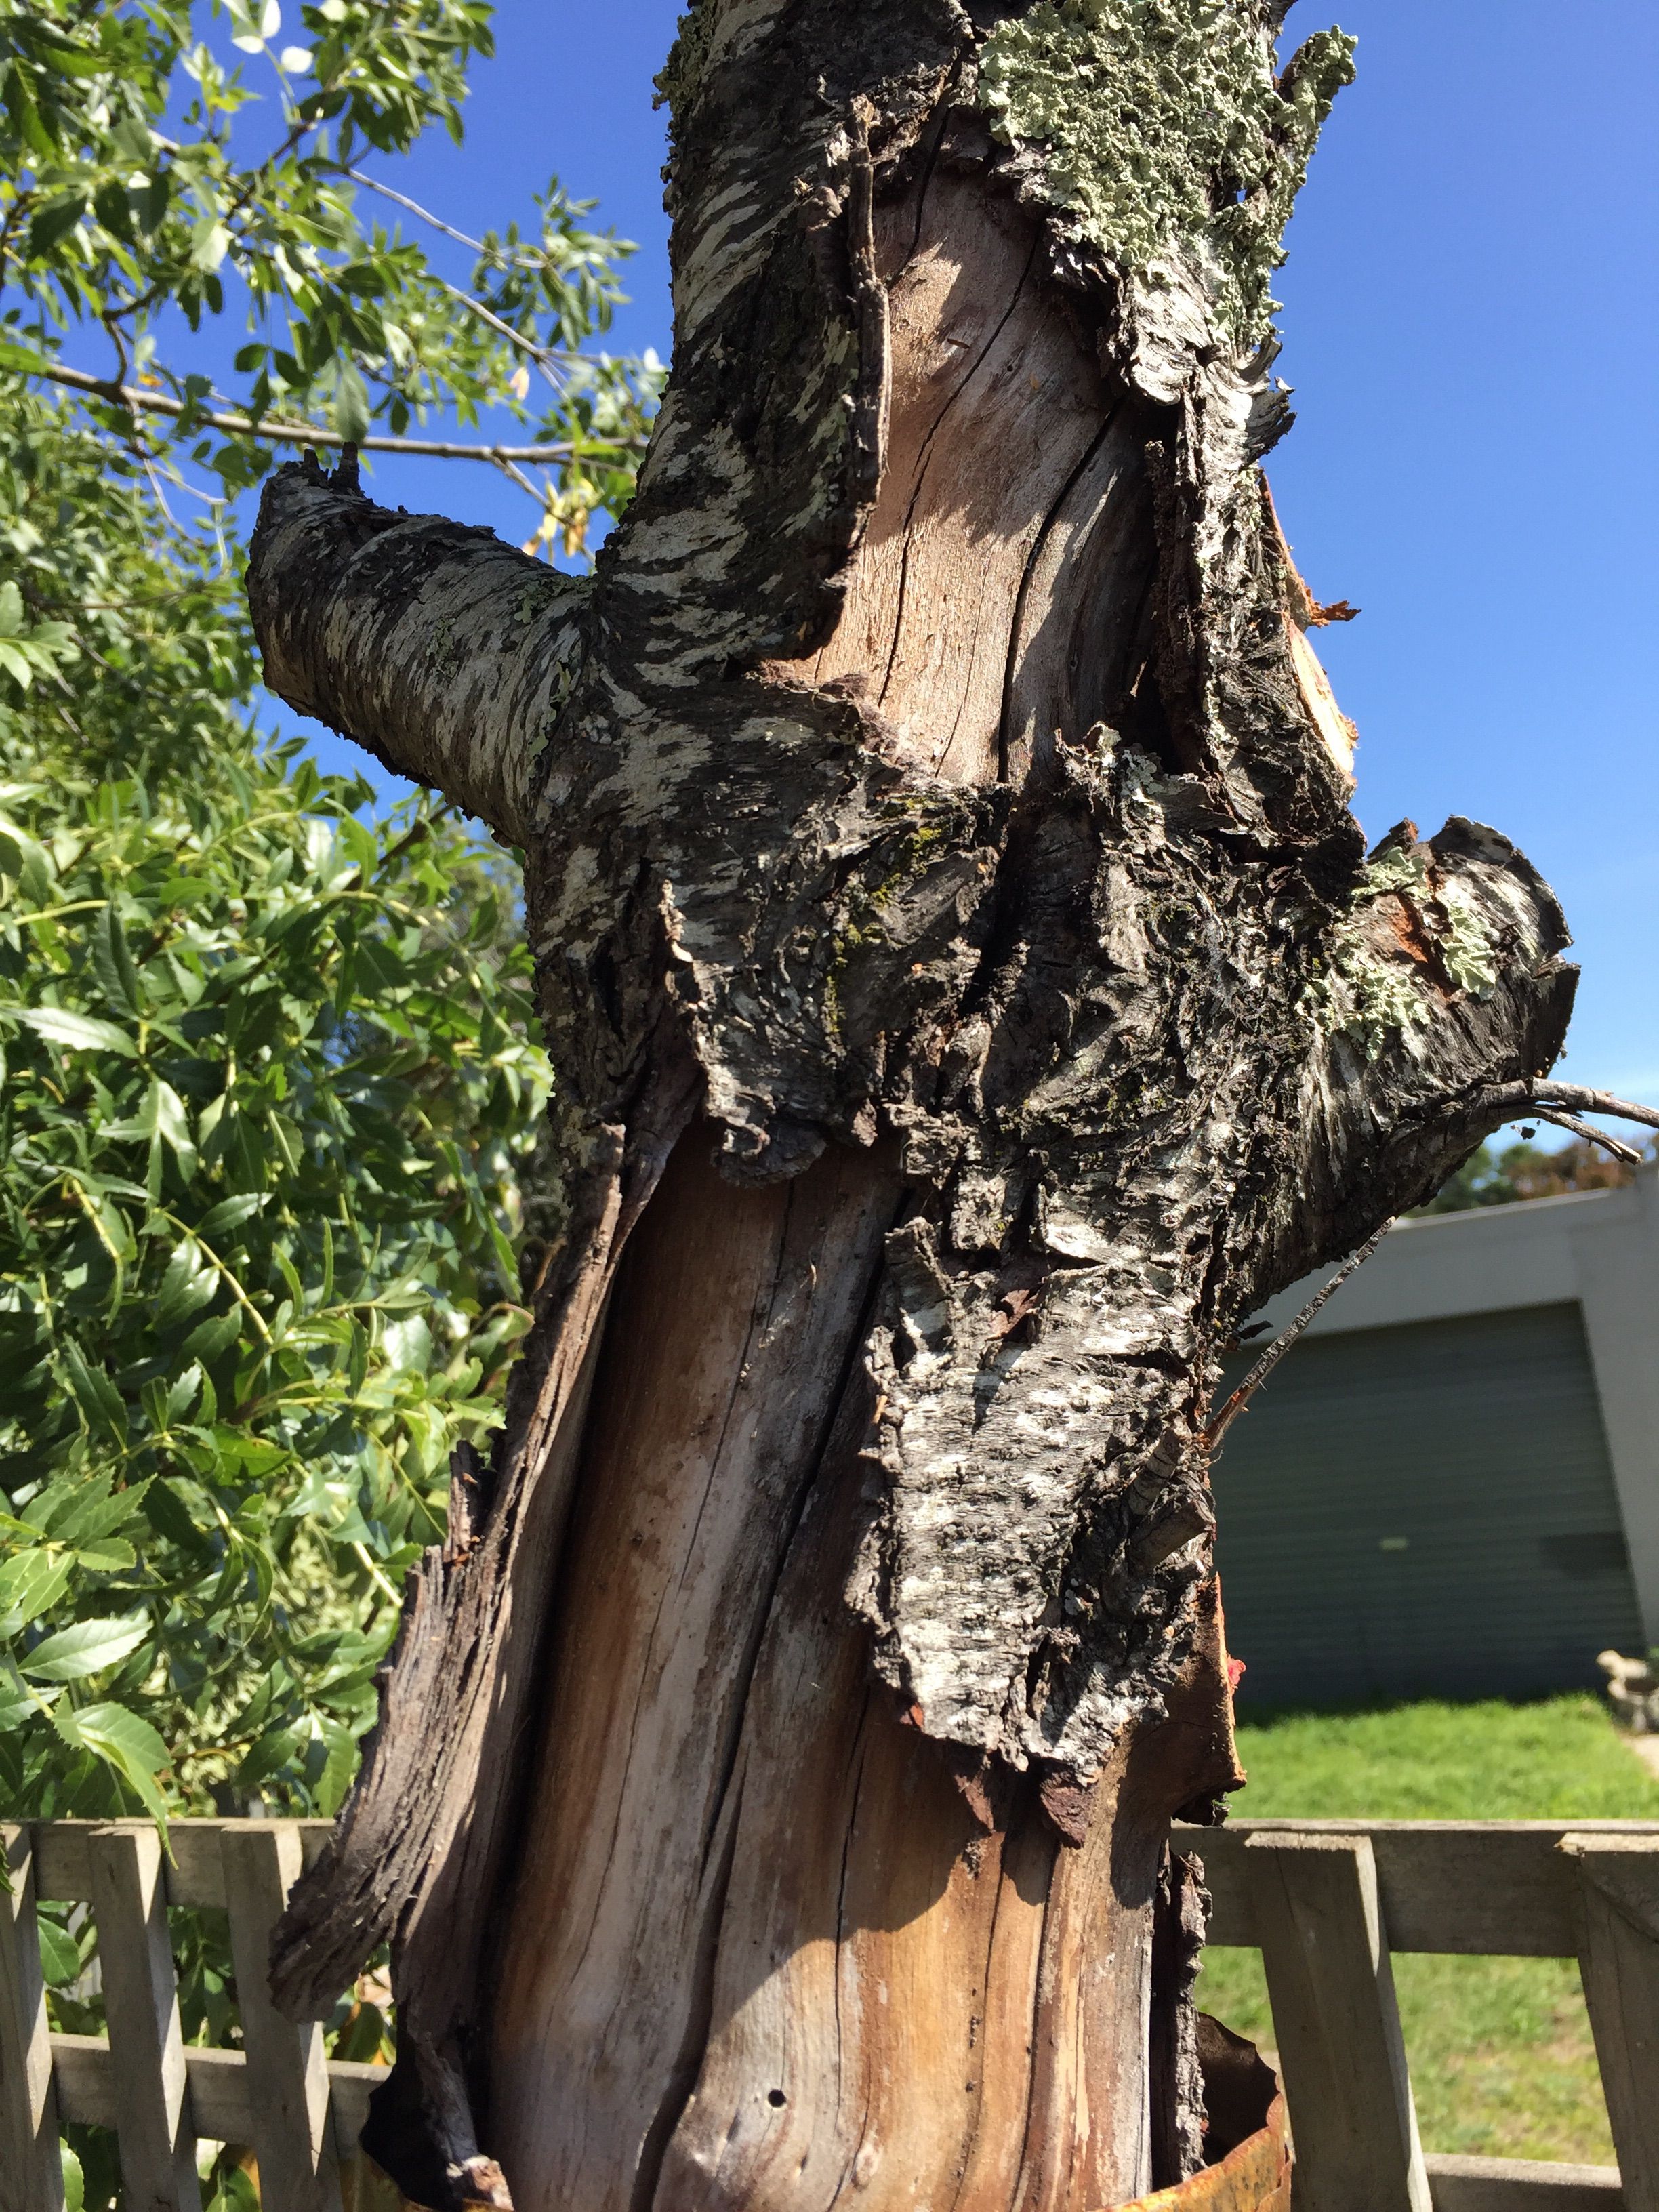 bark cracking open on fruit tree trunk bunnings workshop